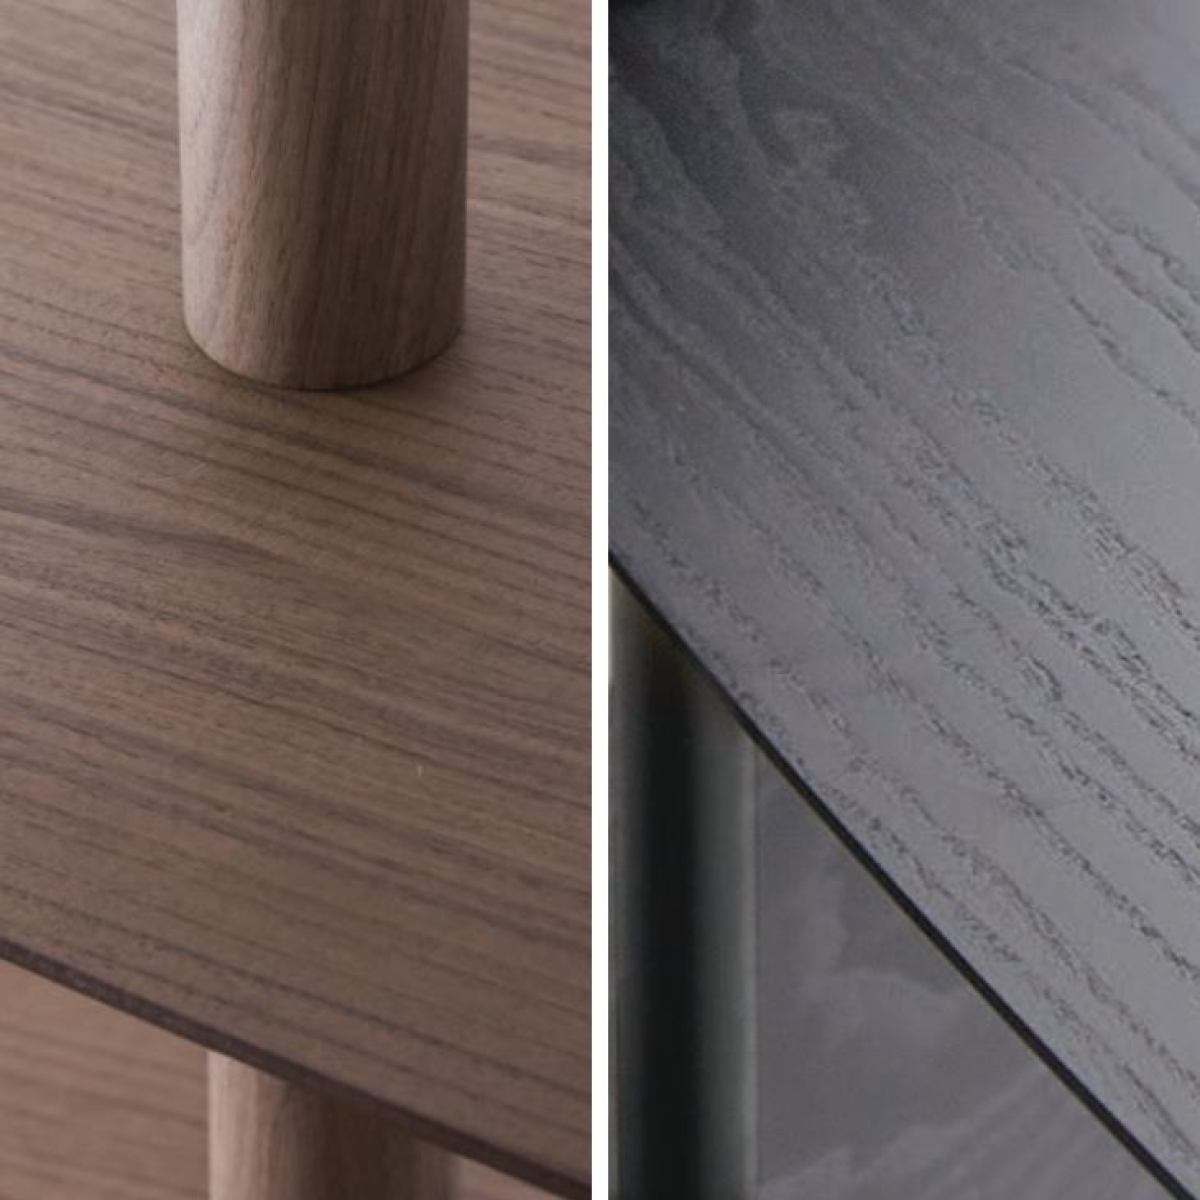 Design Wall Shelf with Real Wood Veneer – Model 8 (standing)